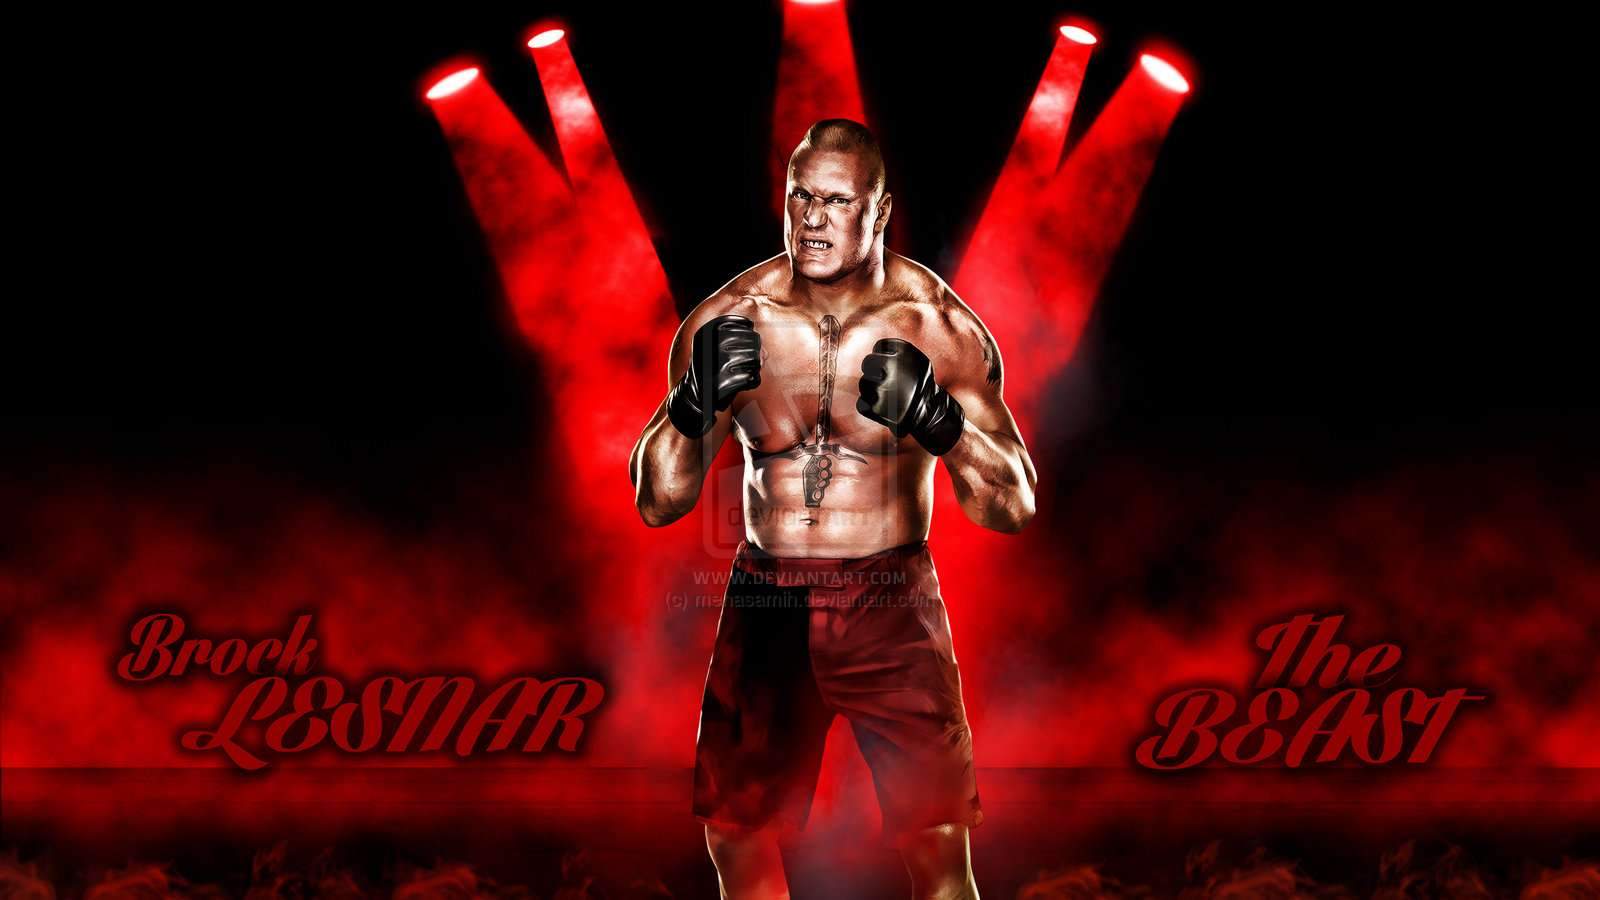 Brock Lesnar WWE Wallpaper HD For Desktop Of WWE Superstar